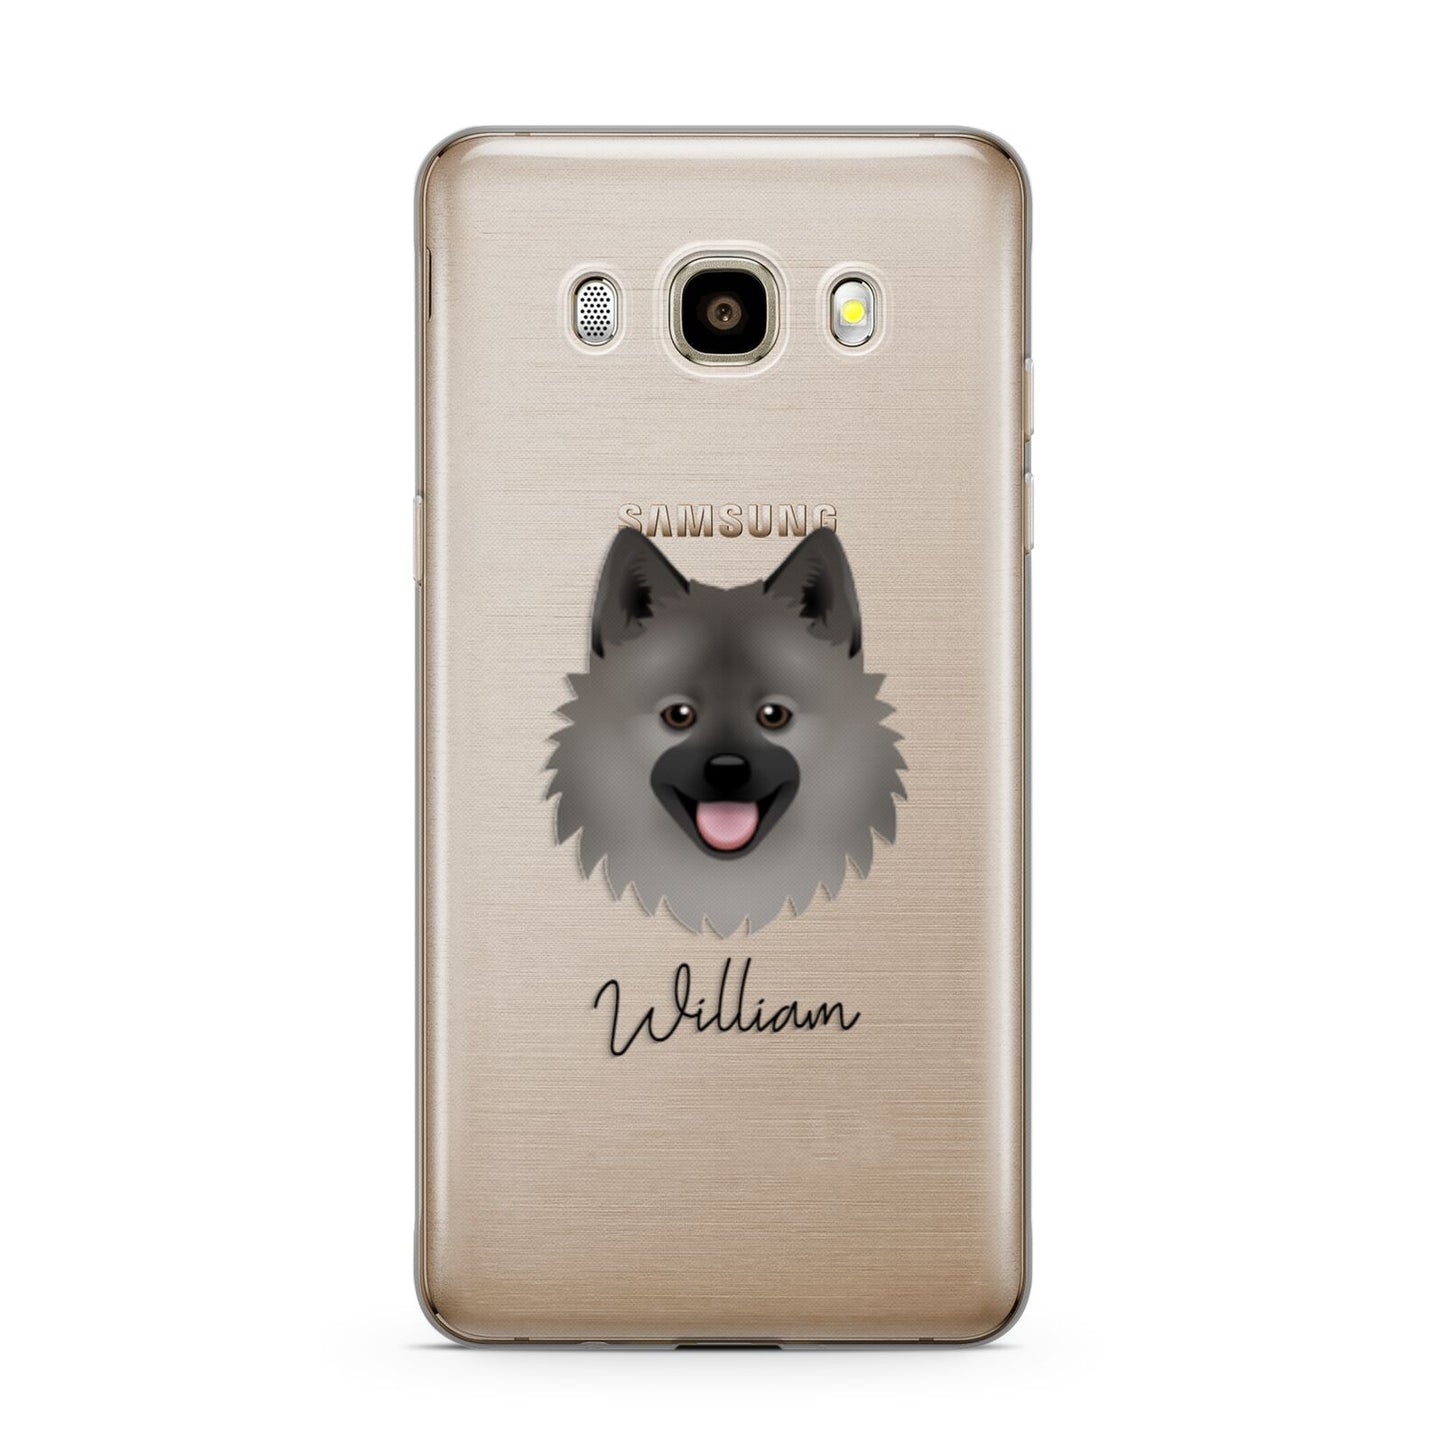 German Spitz Personalised Samsung Galaxy J7 2016 Case on gold phone